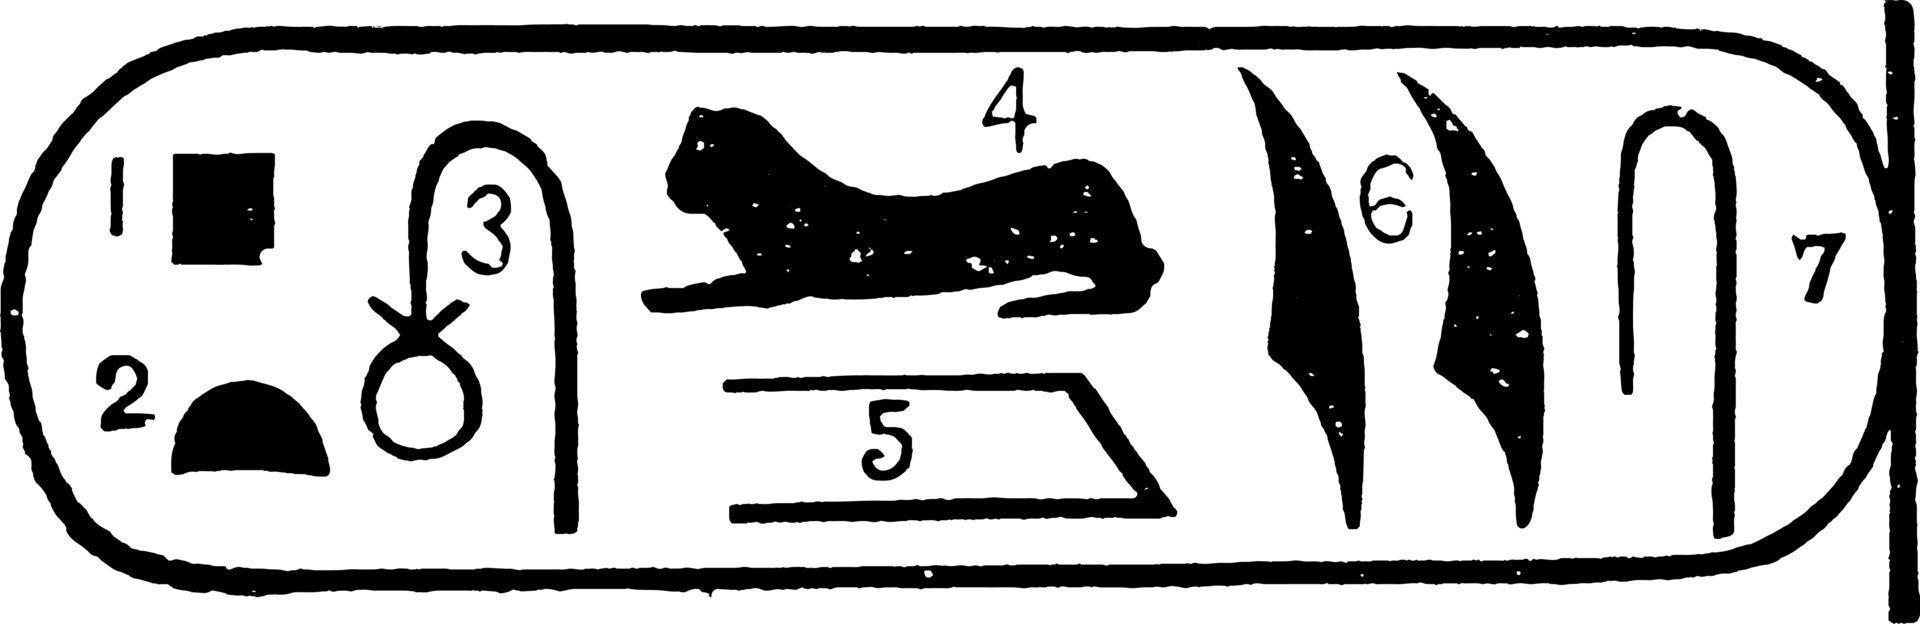 Rosetta Stone Sample or Egyptian artifact, vintage engraving. vector